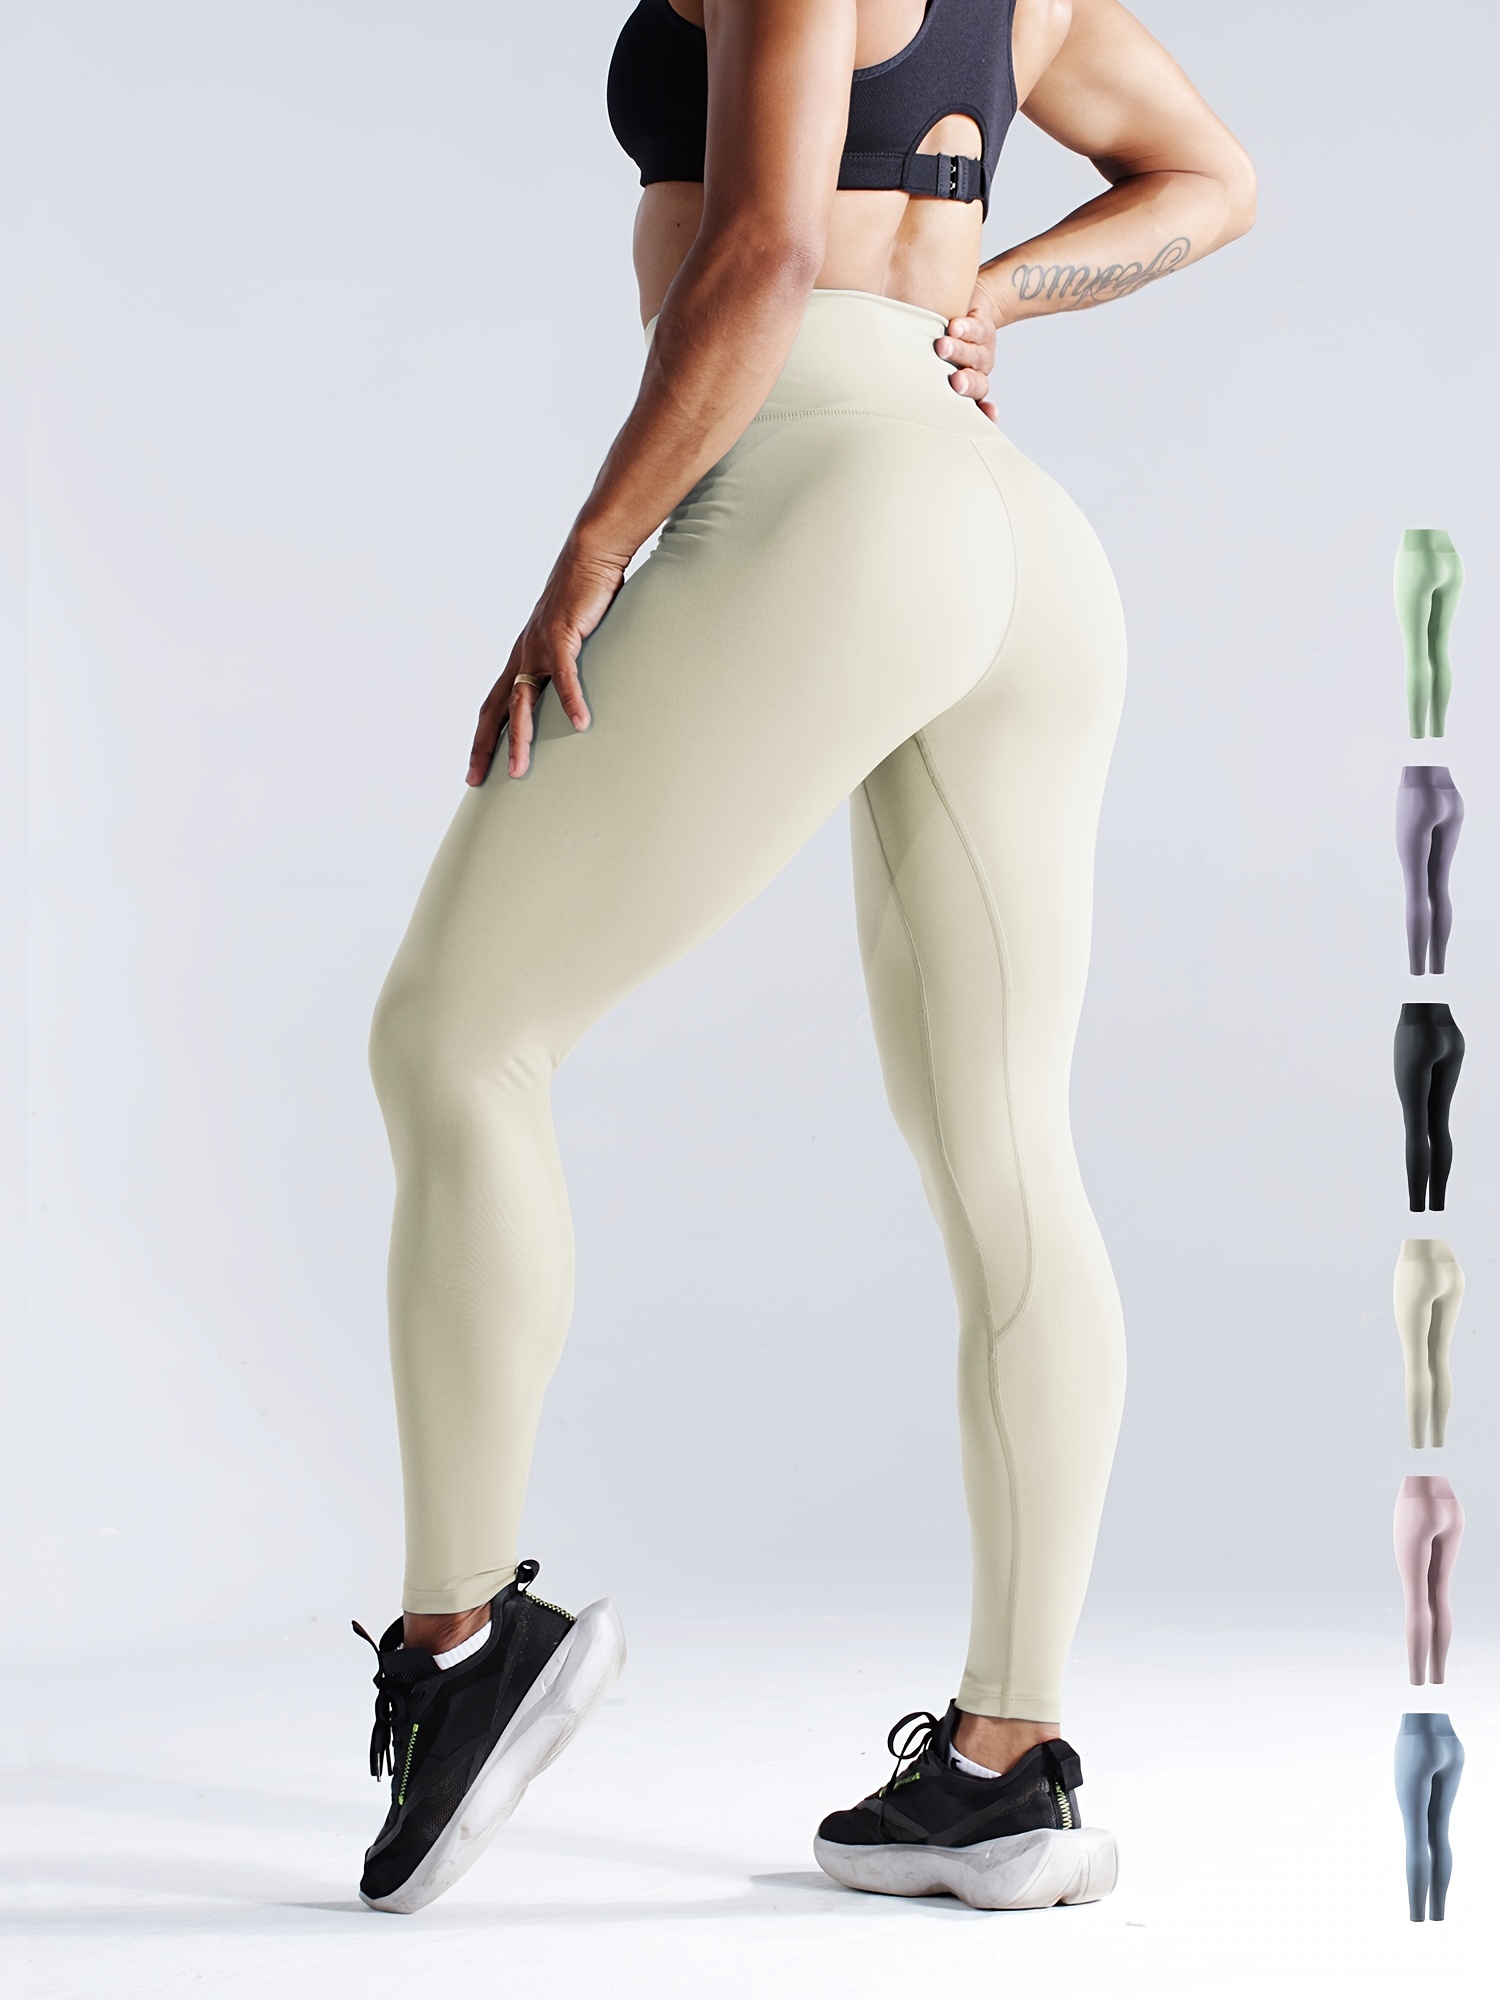 Women's Activewear: Khaki Solid Color Skinny Leggings - Perfect for Yoga,  Running & More!